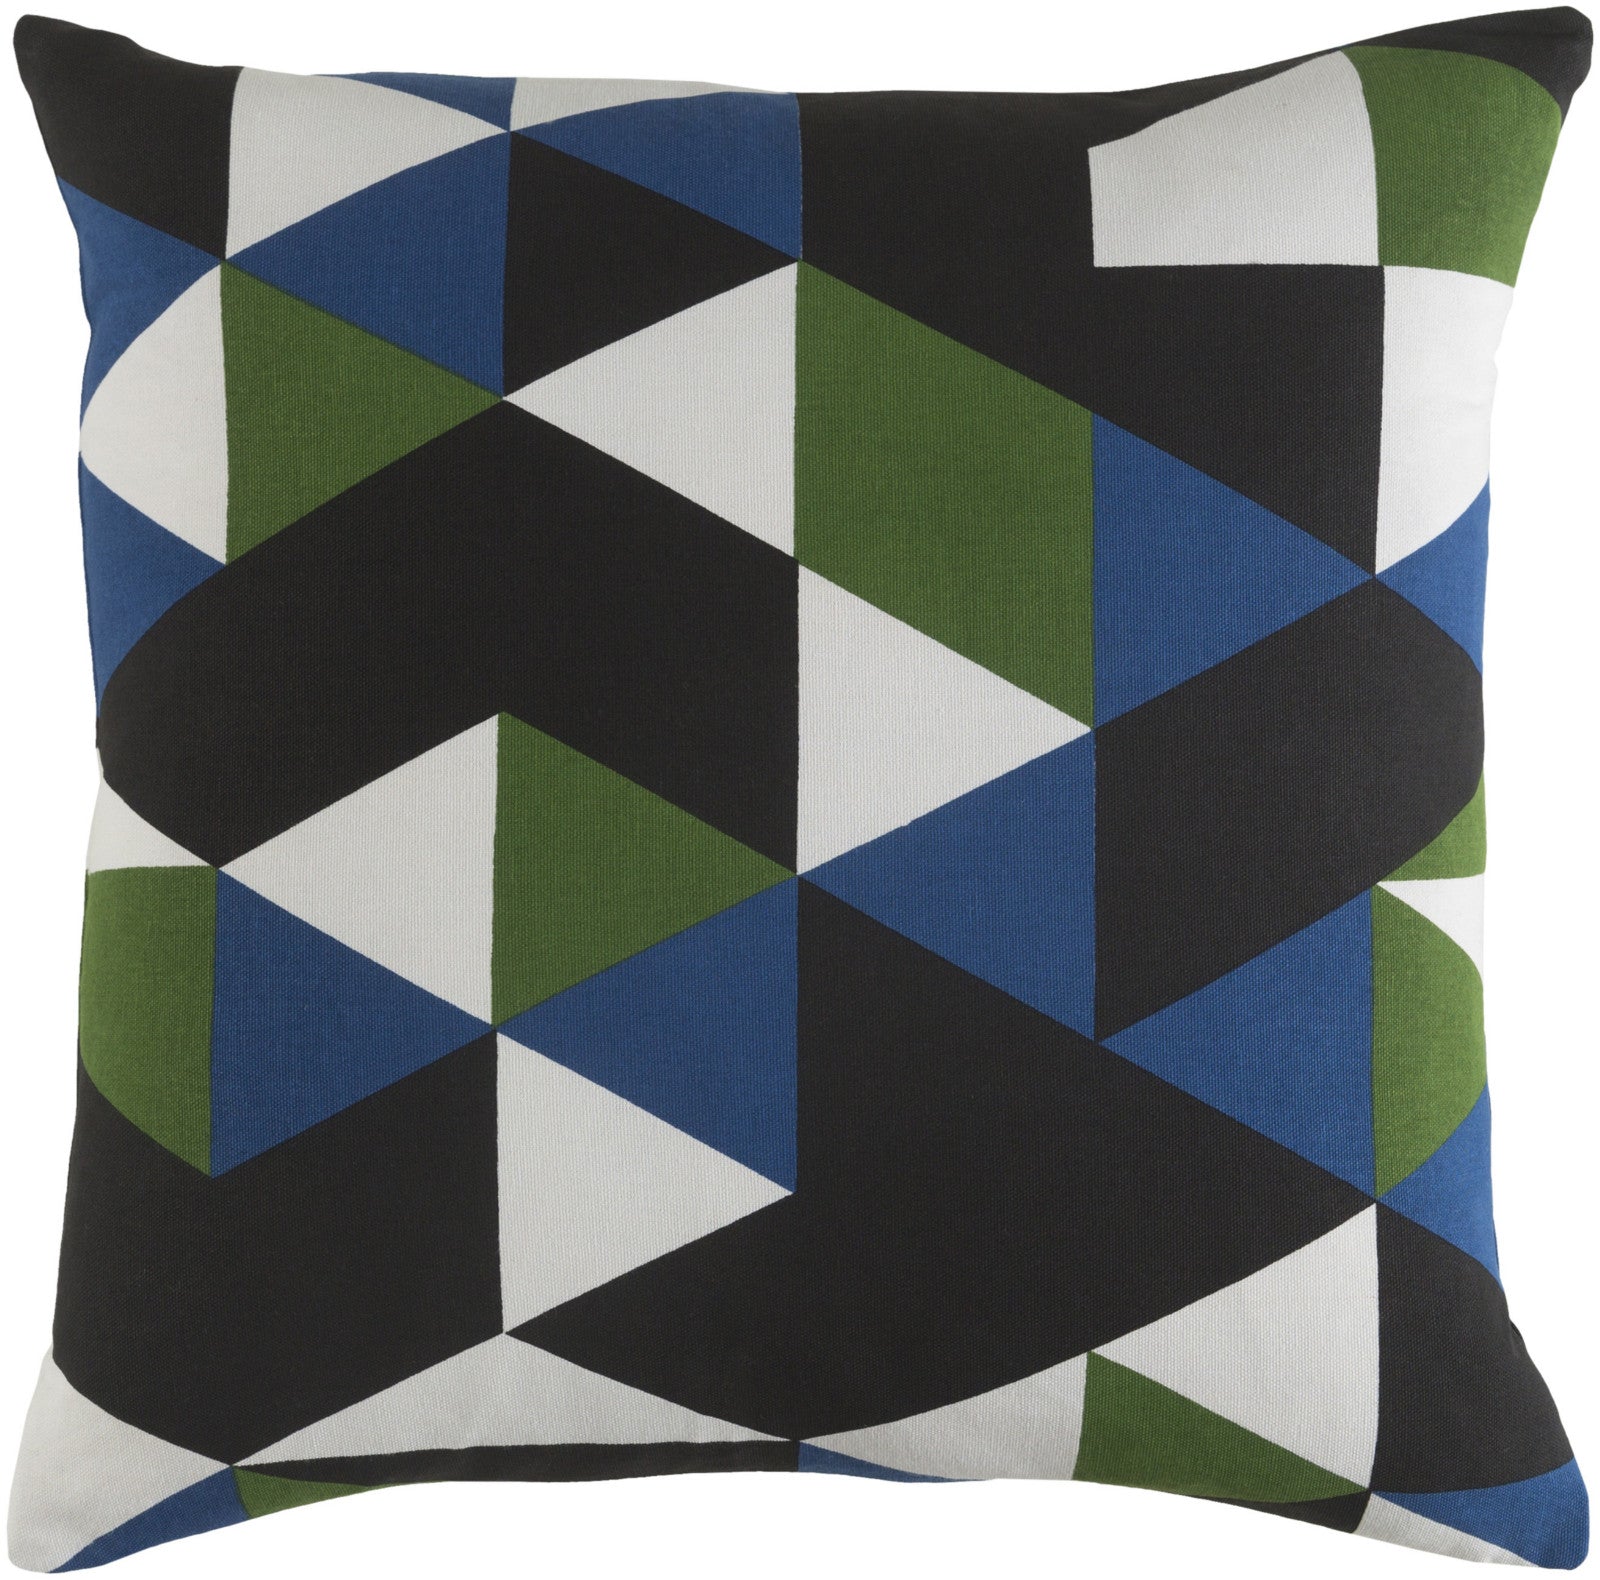 Artistic Weavers Trudy Geometry Blue/Green/Black main image